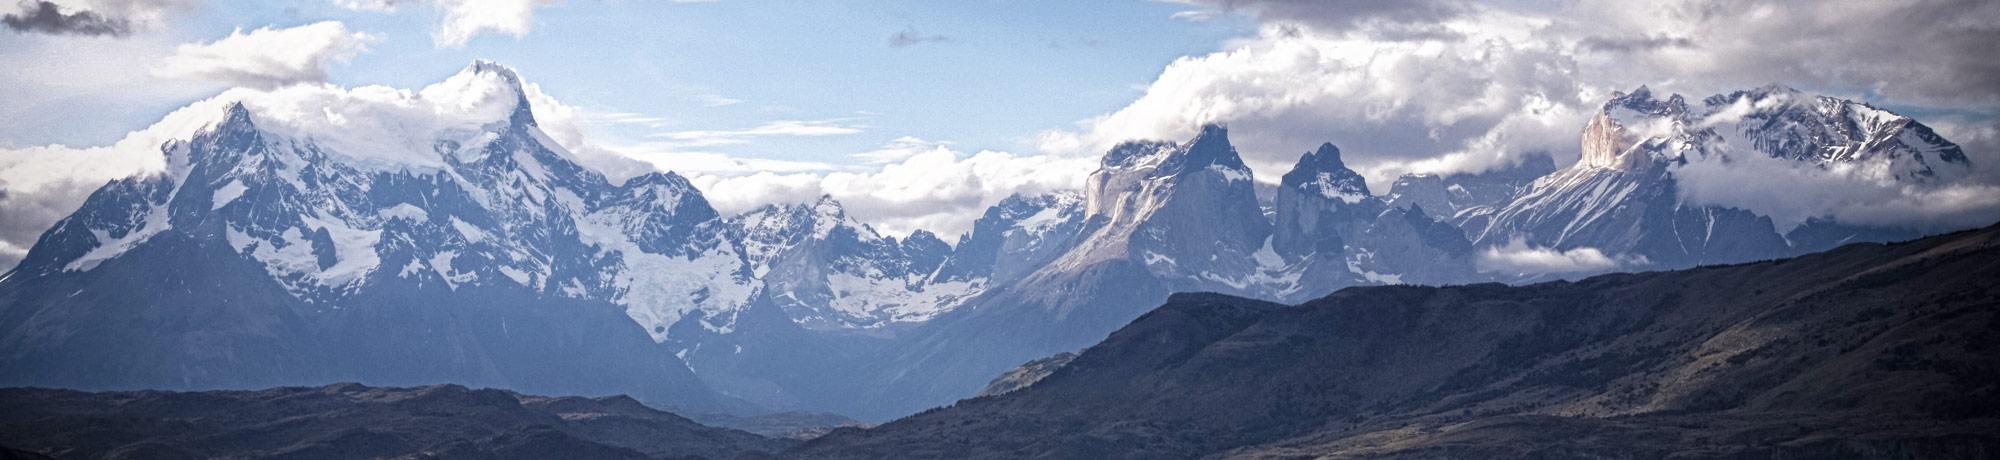 Chile mountain range